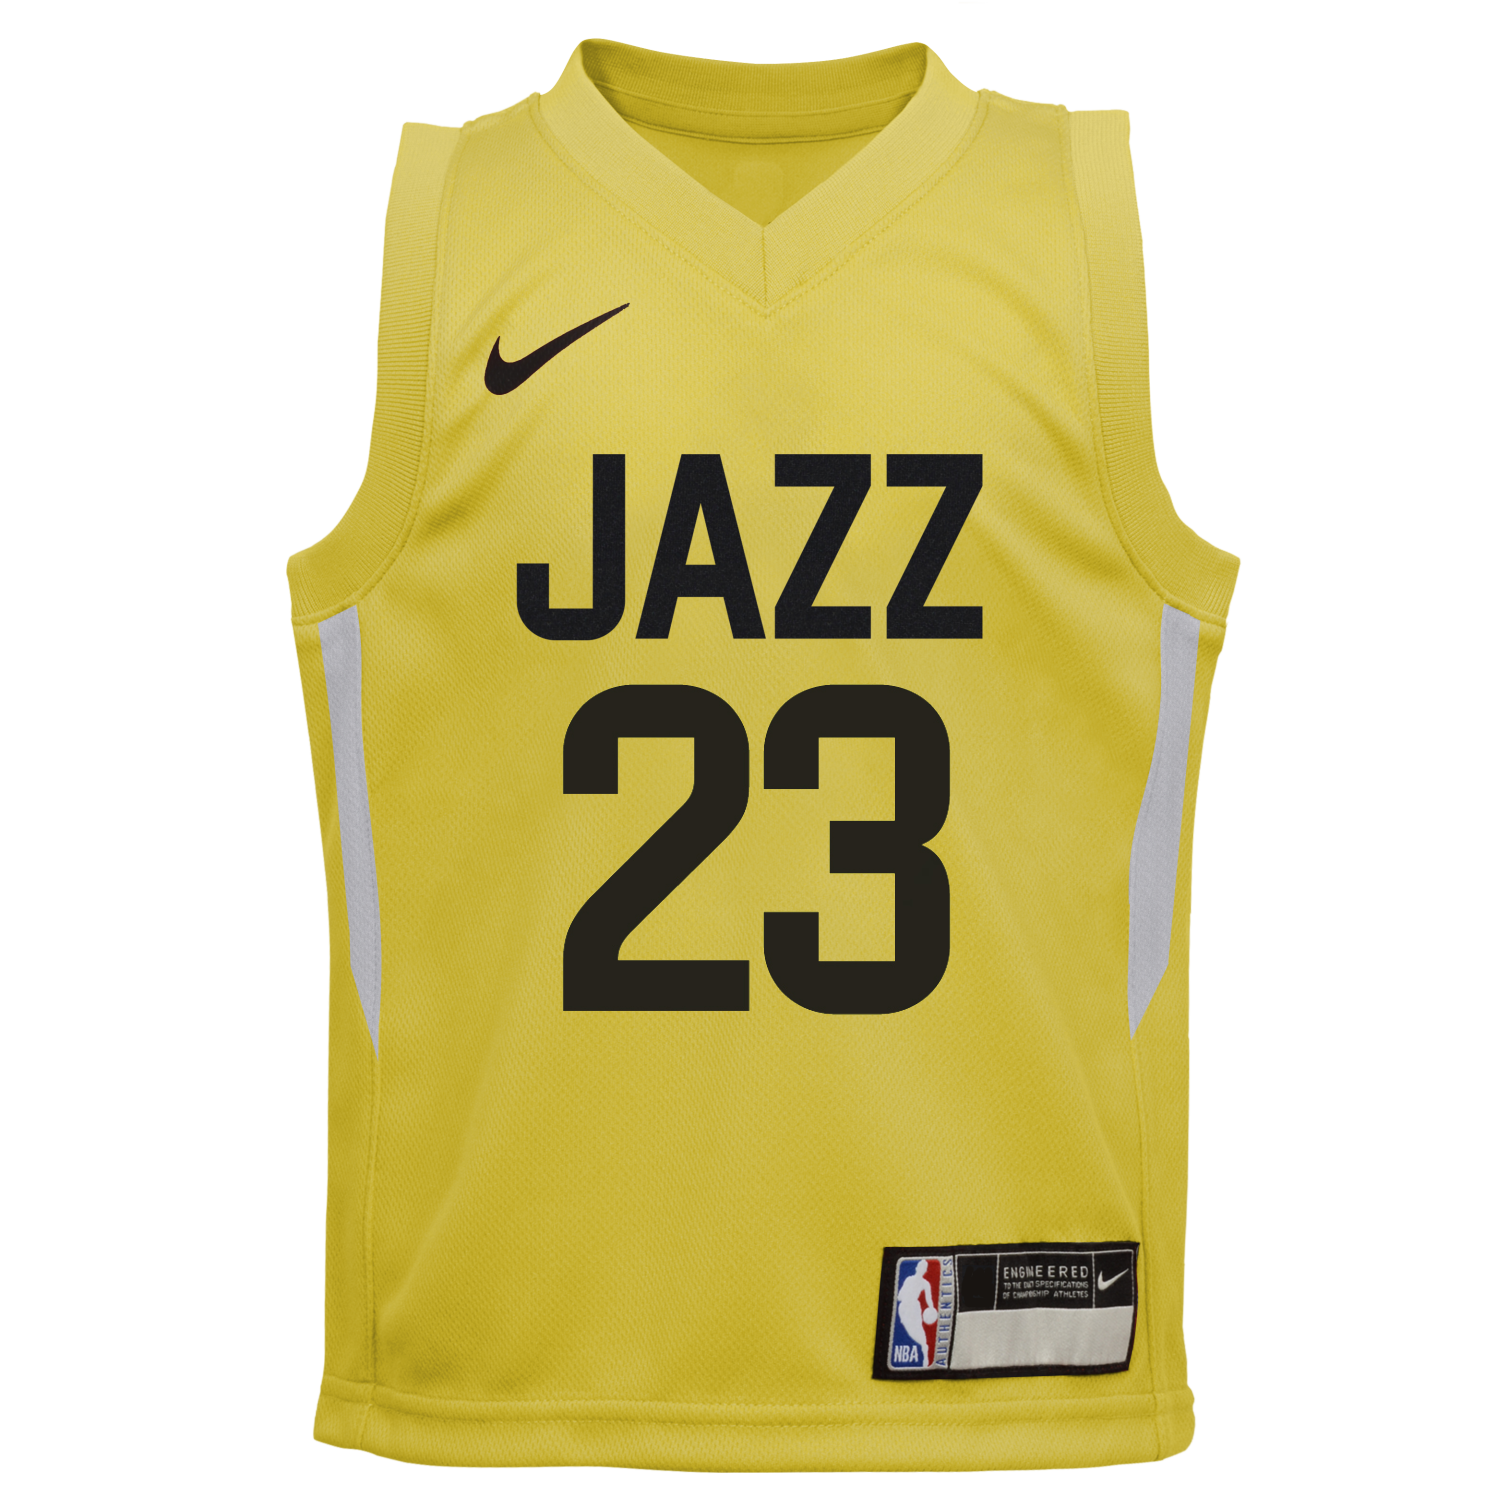 Utah Jazz NBA Jerseys, Utah Jazz Basketball Jerseys